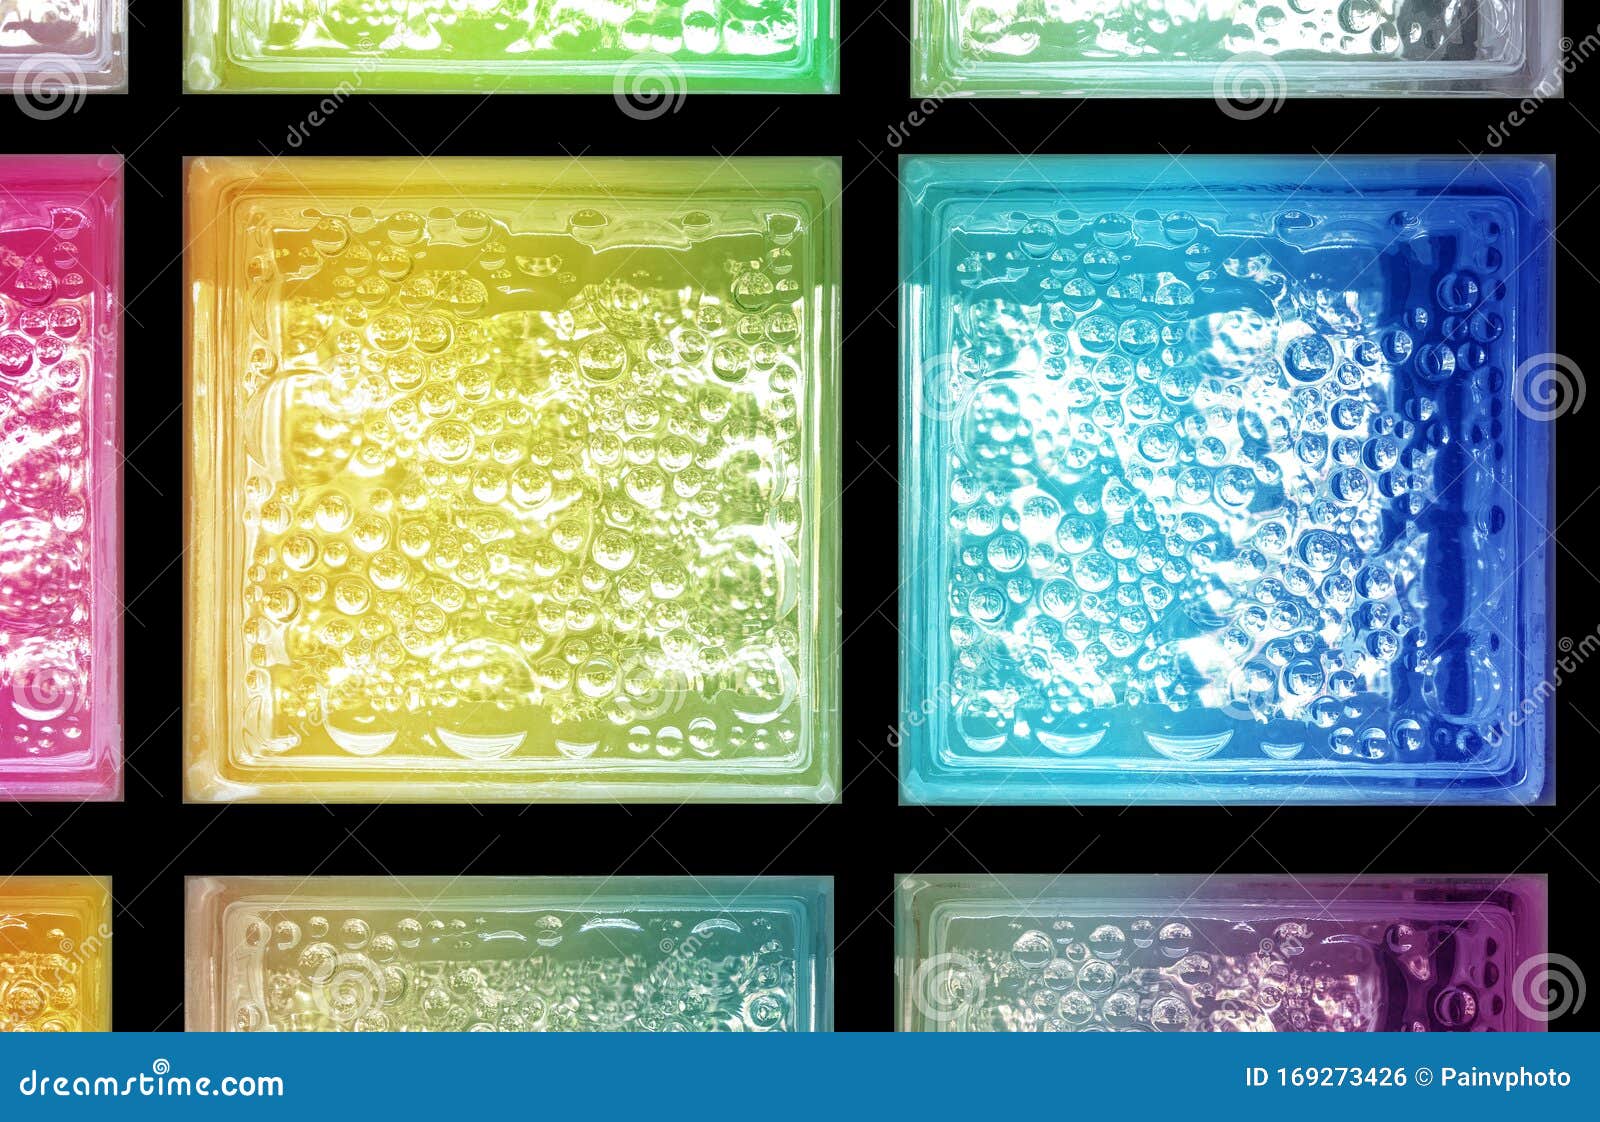 https://thumbs.dreamstime.com/z/panel-rainbow-gradient-colors-light-transparent-square-mirror-glass-block-cube-window-panel-panel-rainbow-gradient-colors-169273426.jpg